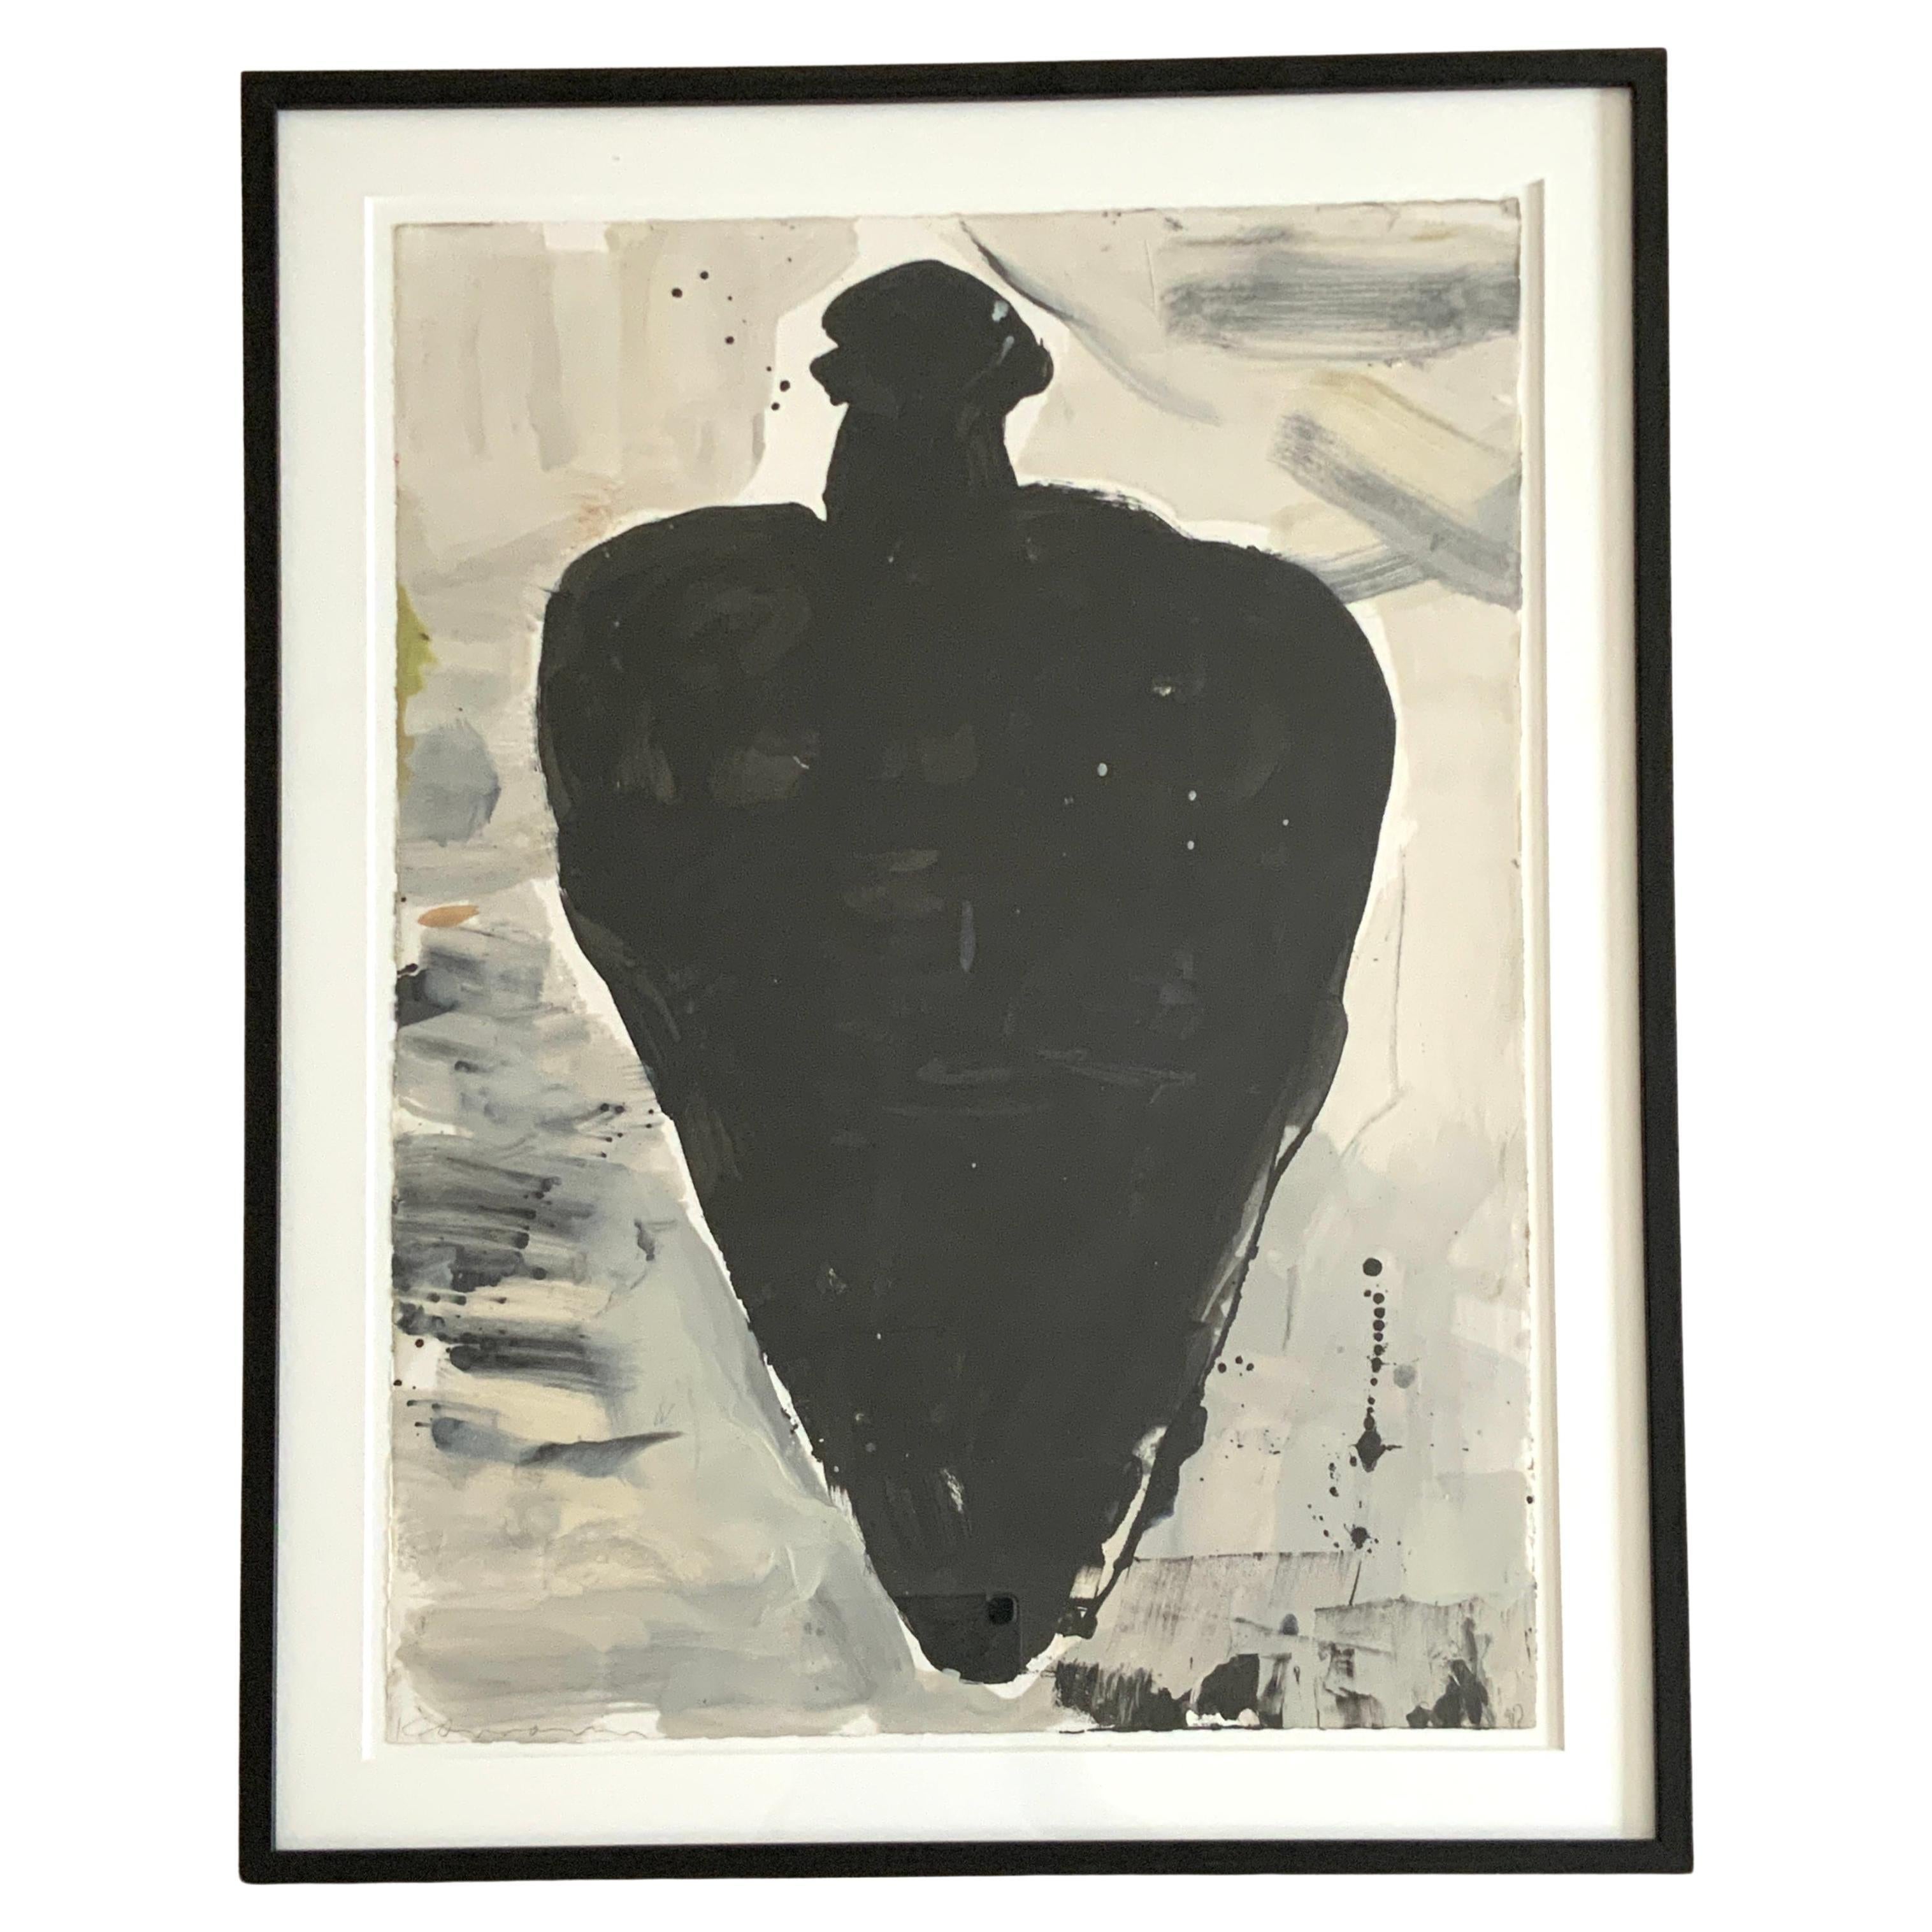 Gary Komarin “Untitled Black Vessel on Gray”, acrylic on paper, 2000